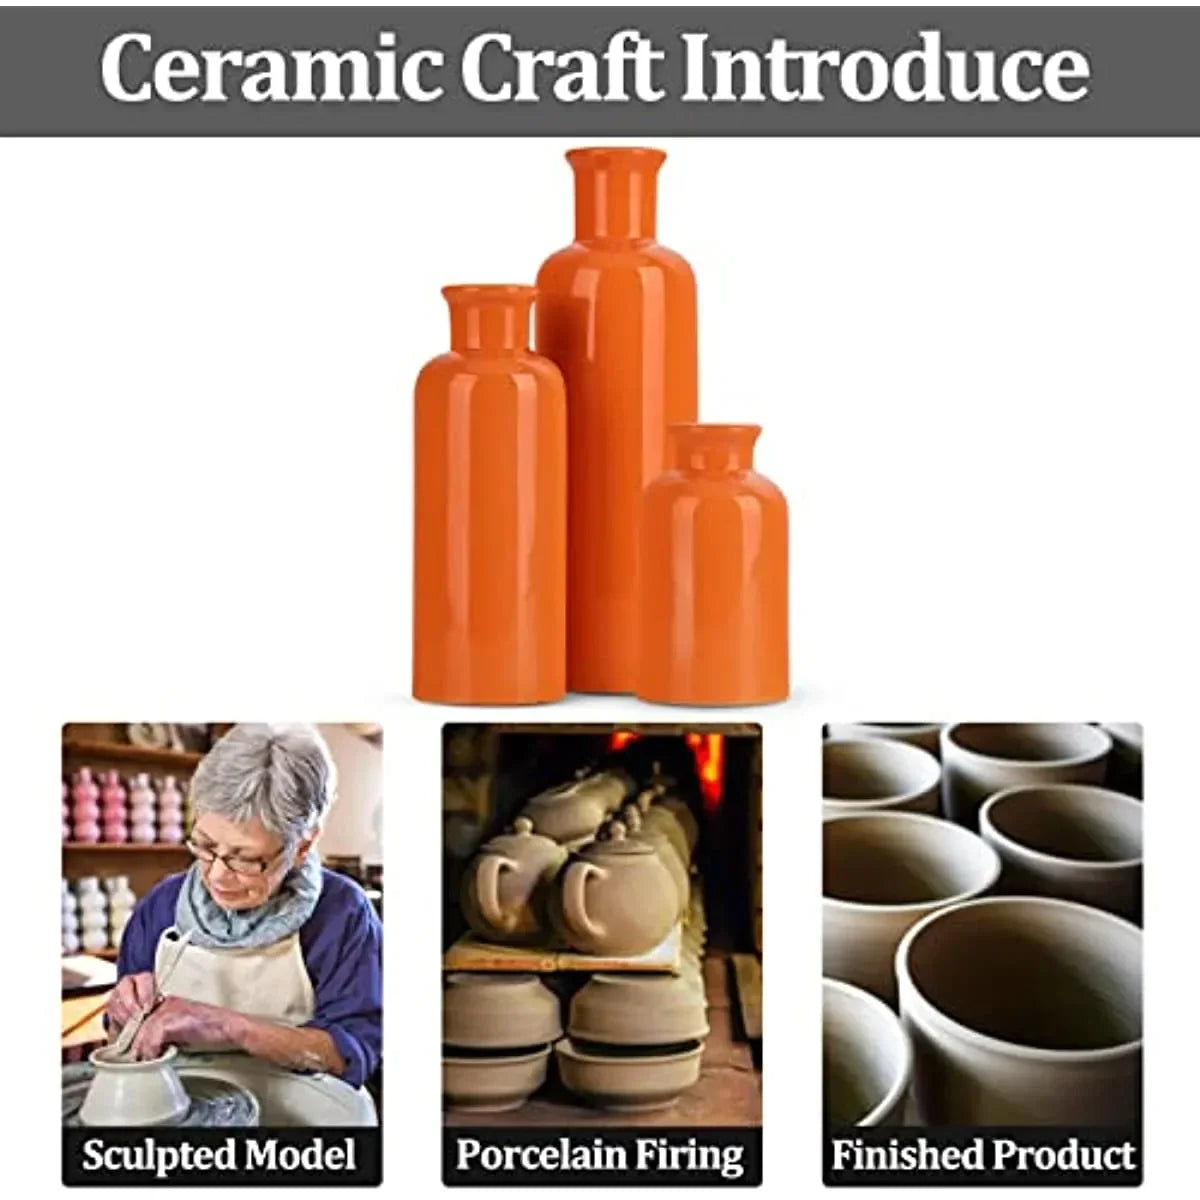 Orange Ceramic Vase Set for 3 Modern Minimalist Decor Boho Vases Farmhouse Home Décor Accents Living Room Centerpieces